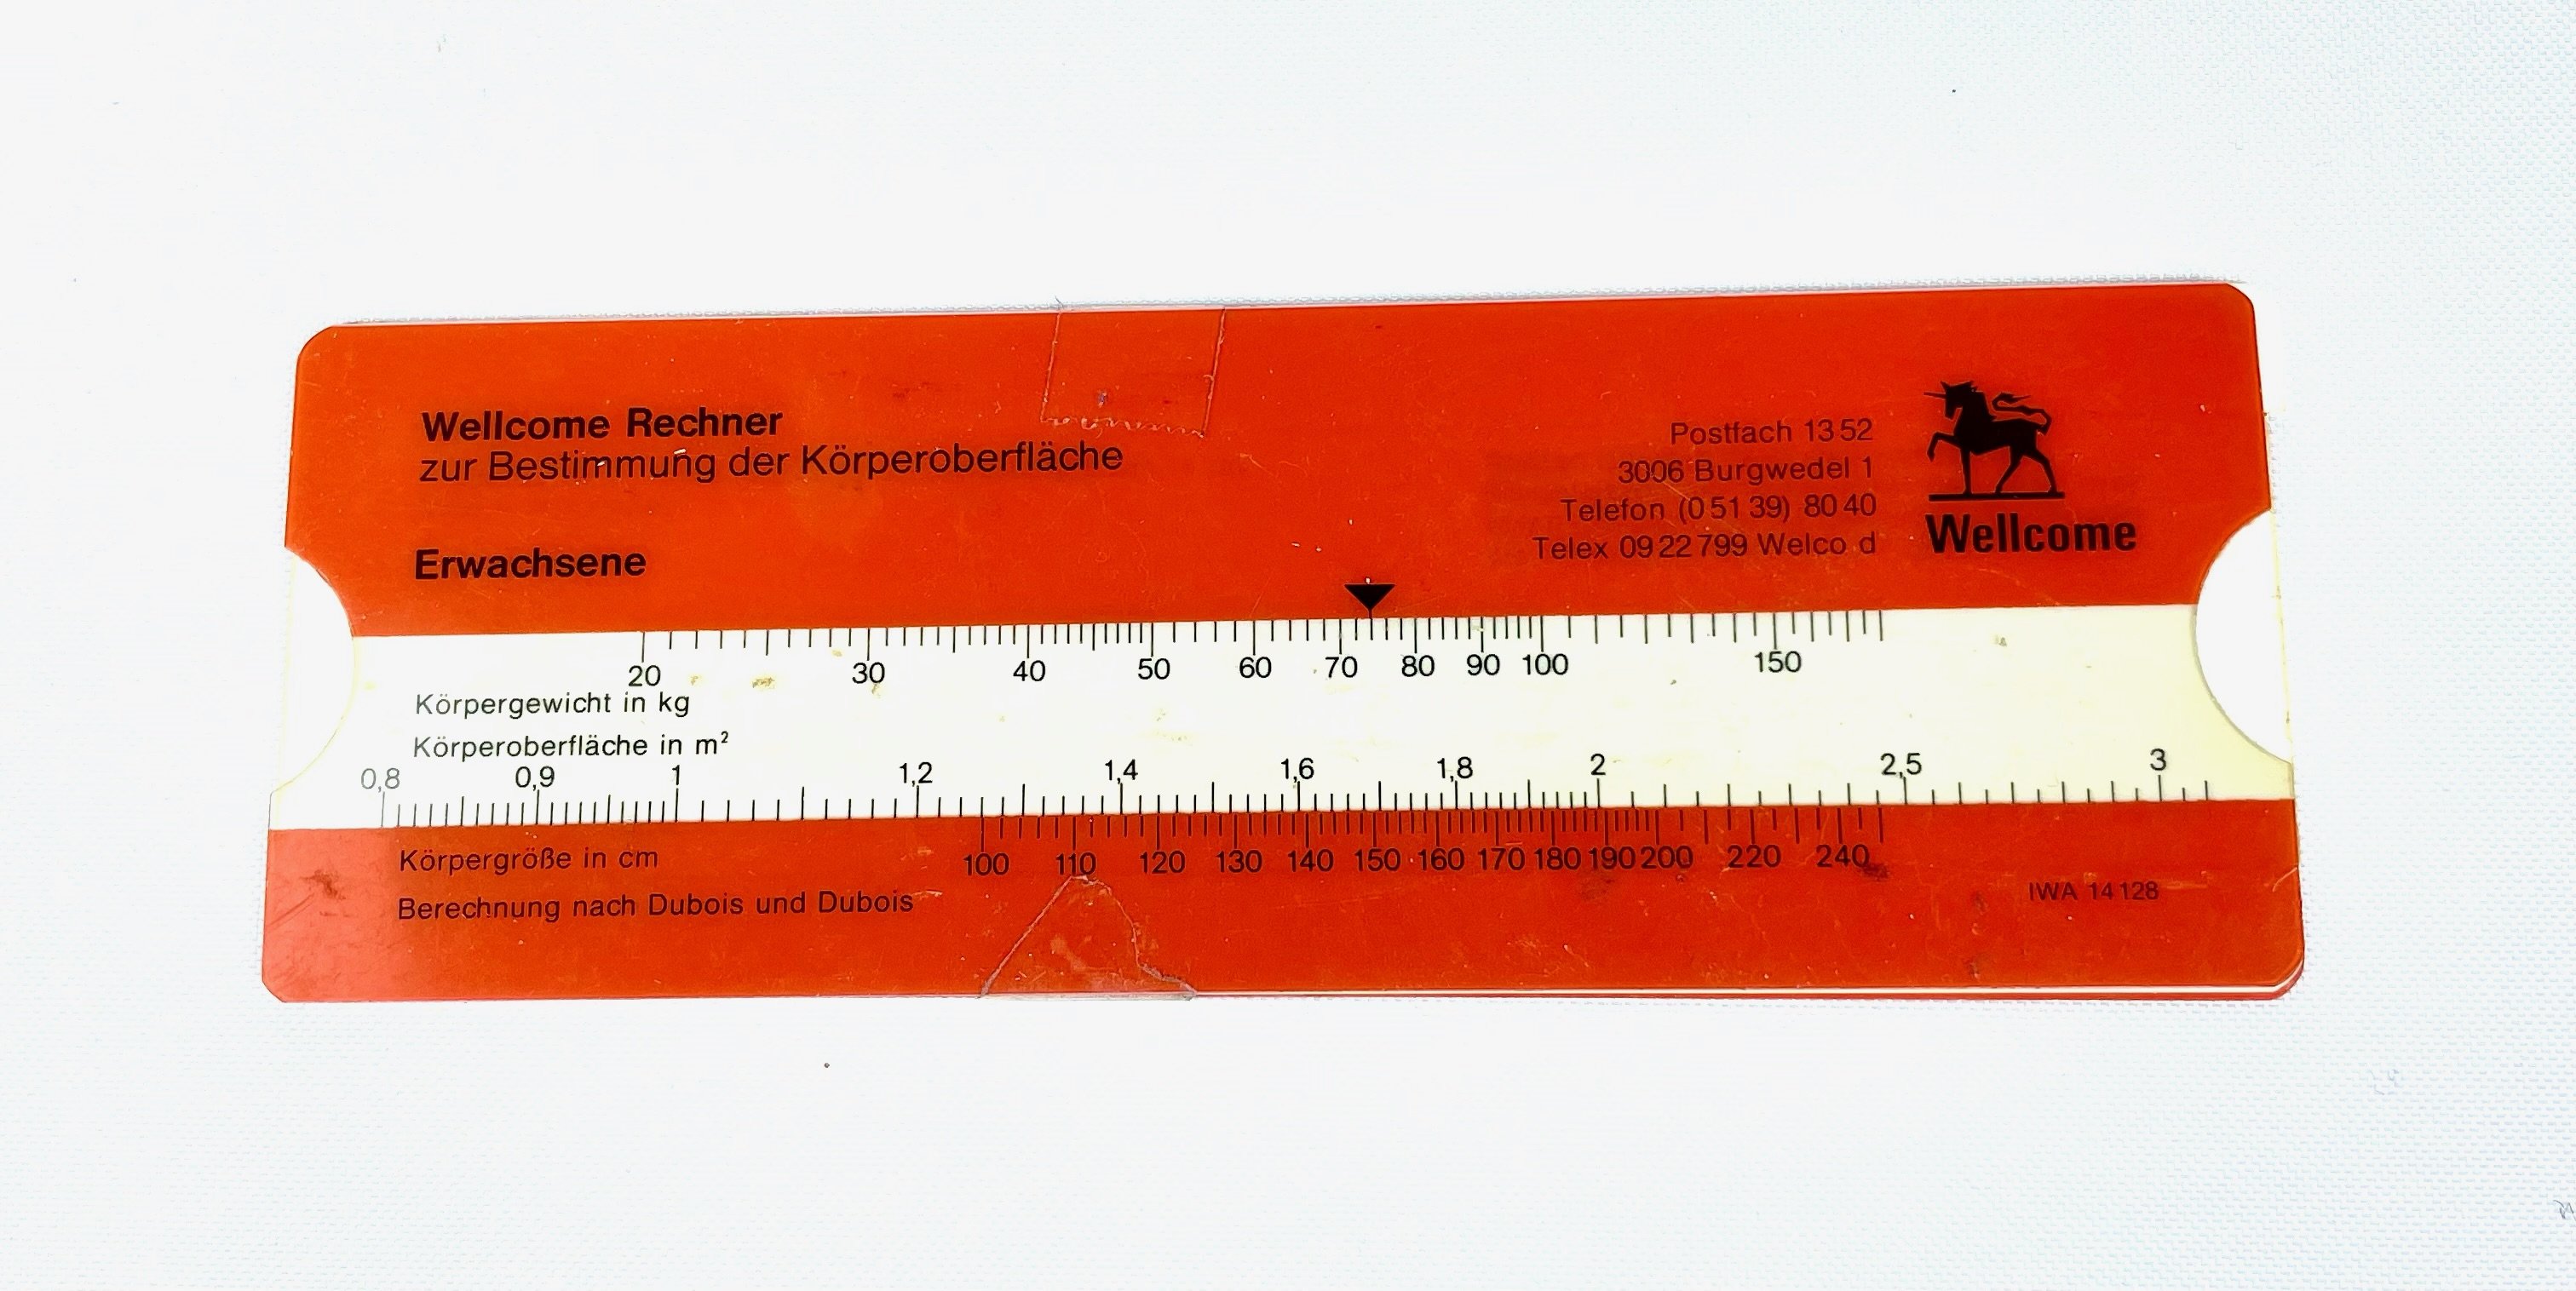 Rechenschieber für Bestimmung der Körperoberfläche (Krankenhausmuseum Bielefeld e.V. CC BY-NC-SA)